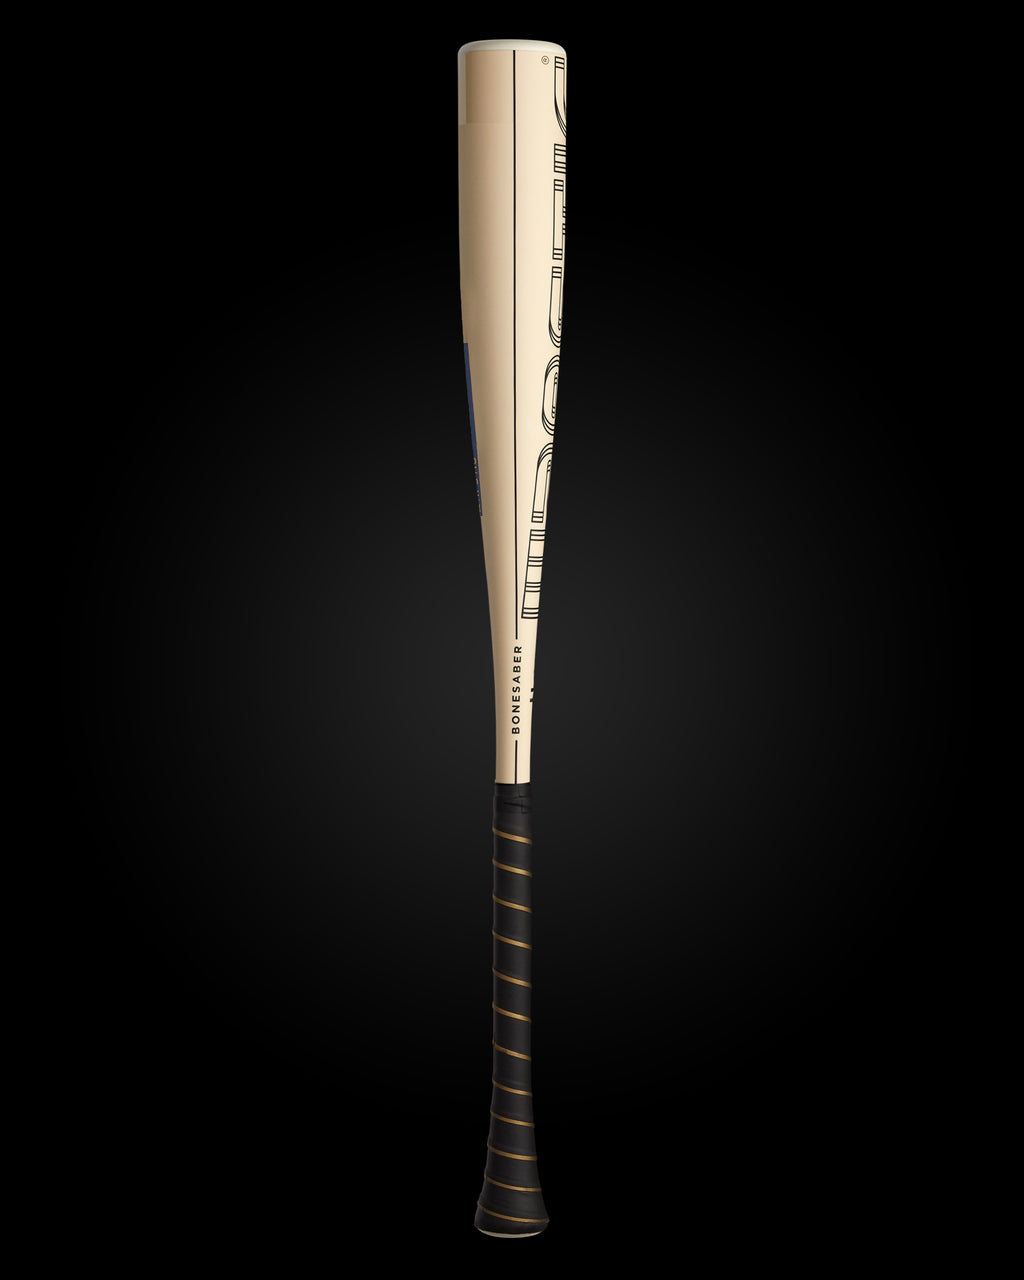 baseball bat images